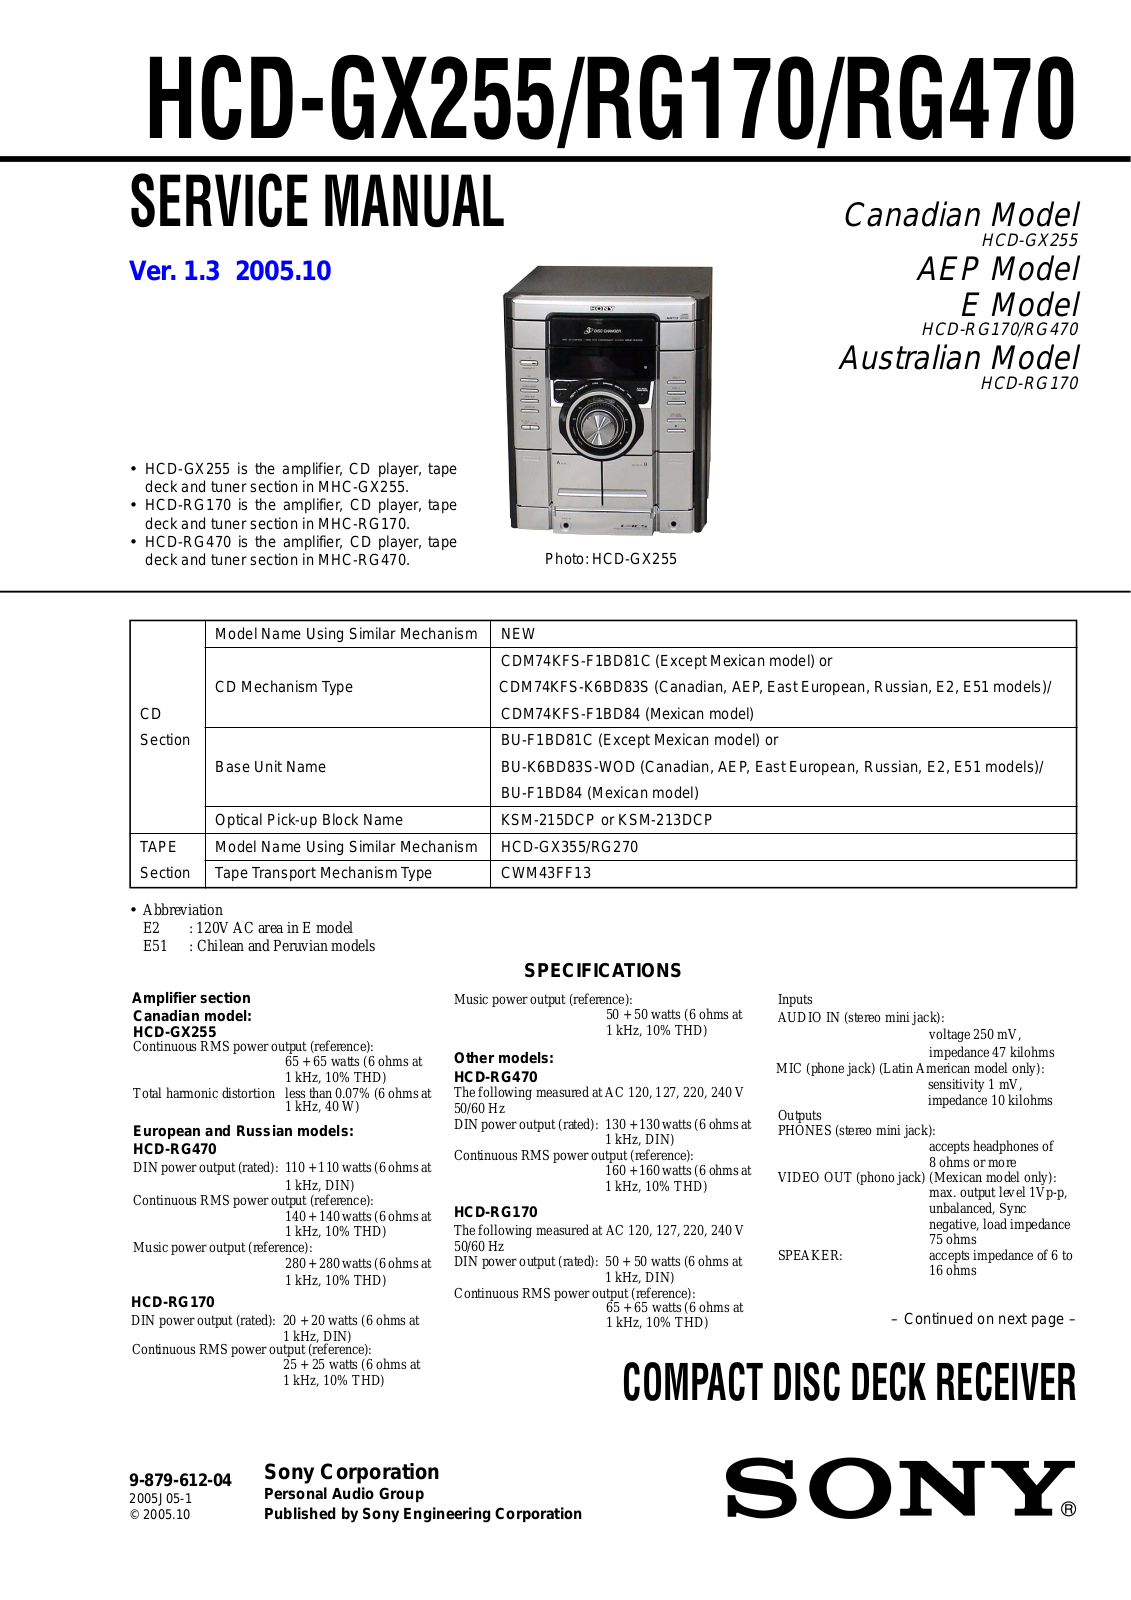 SONY HCD-GX255, HCD-RG170, HCD-RG470 Service Manual